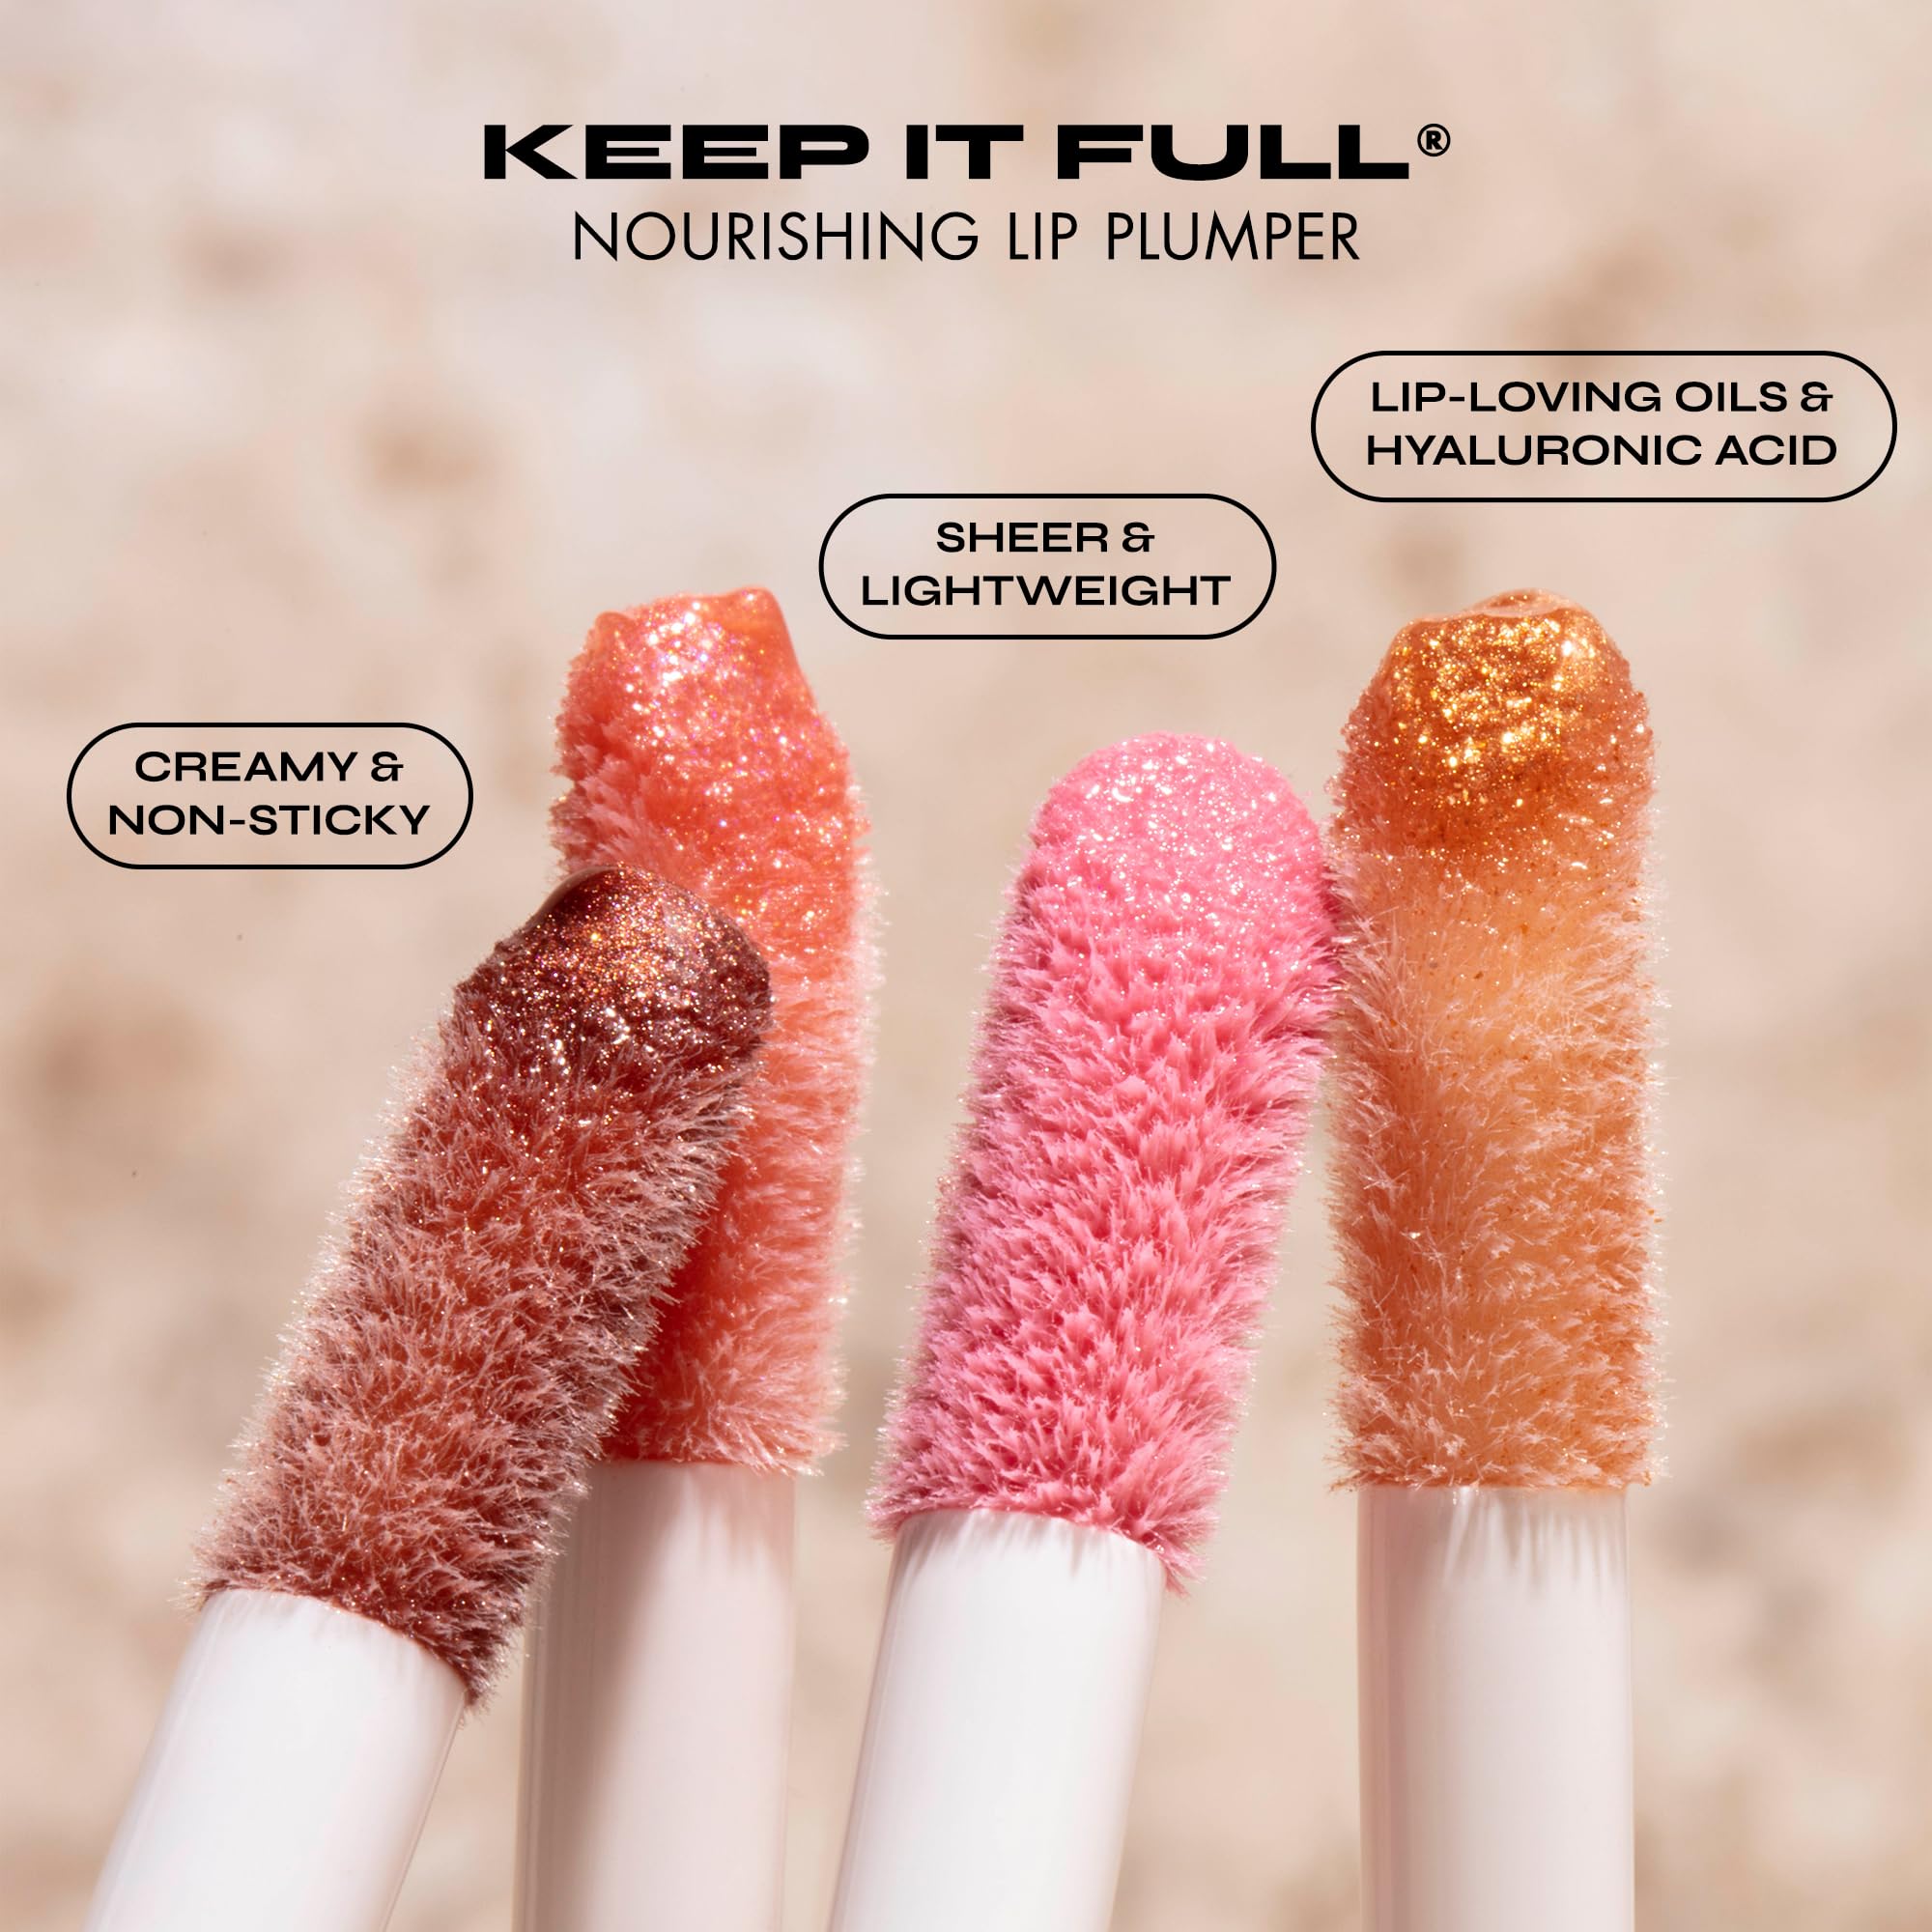 Milani Keep It Full Nourishing Lip Plumper (0.13 Fl. Oz.) Cruelty-Free Lip Gloss for Soft, Fuller-Looking Lips (Luminoso)